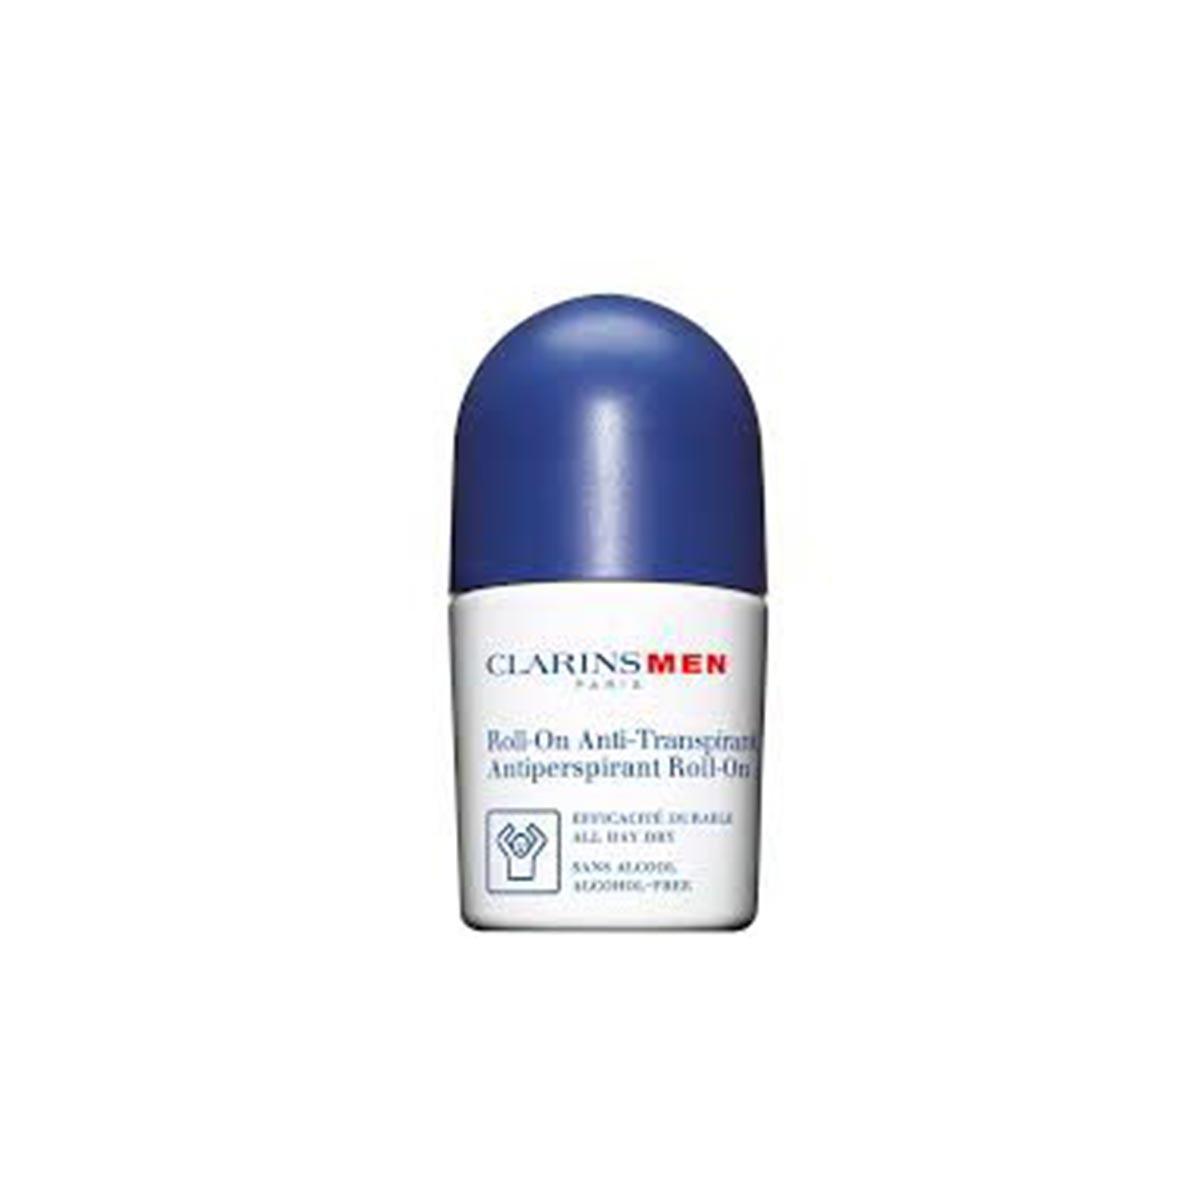 clarins-rollon-antitranspirant-50ml